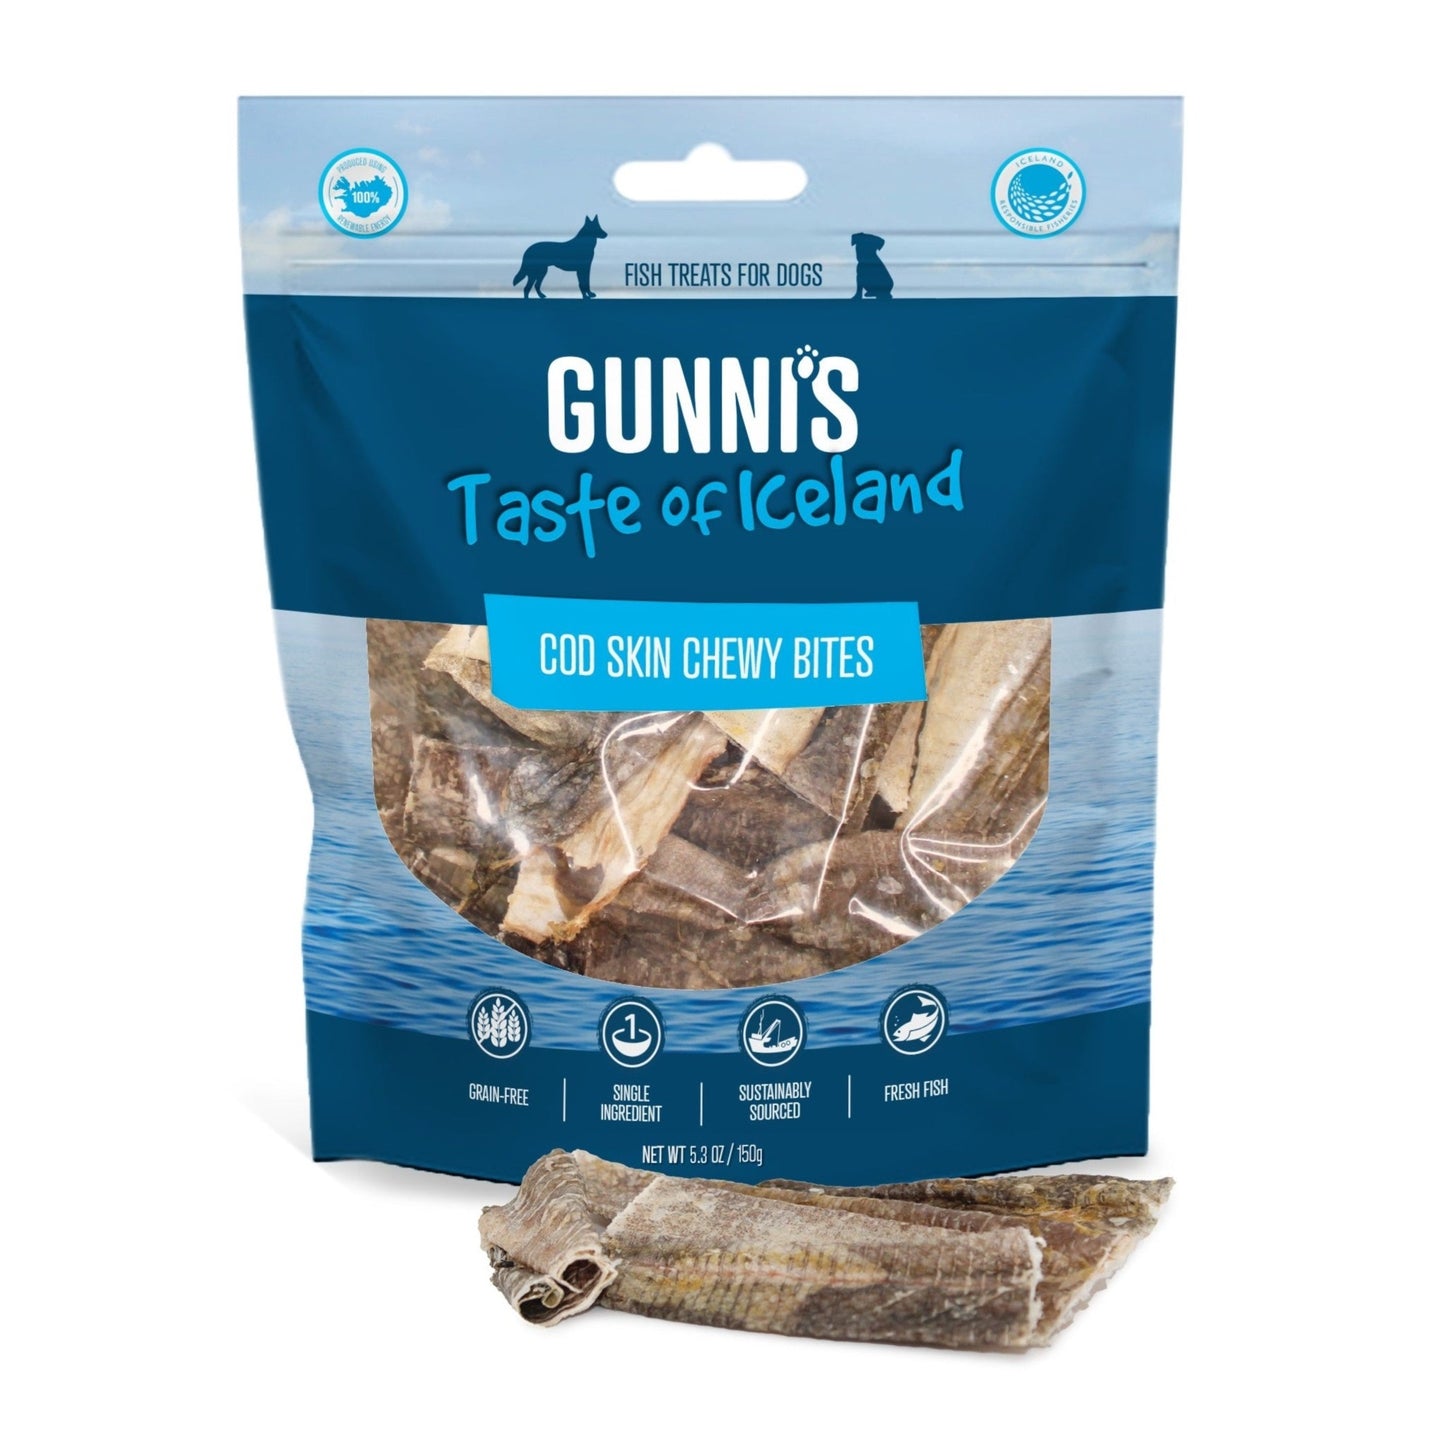 Gunnis Cod Skin Chewy Bites, 150g